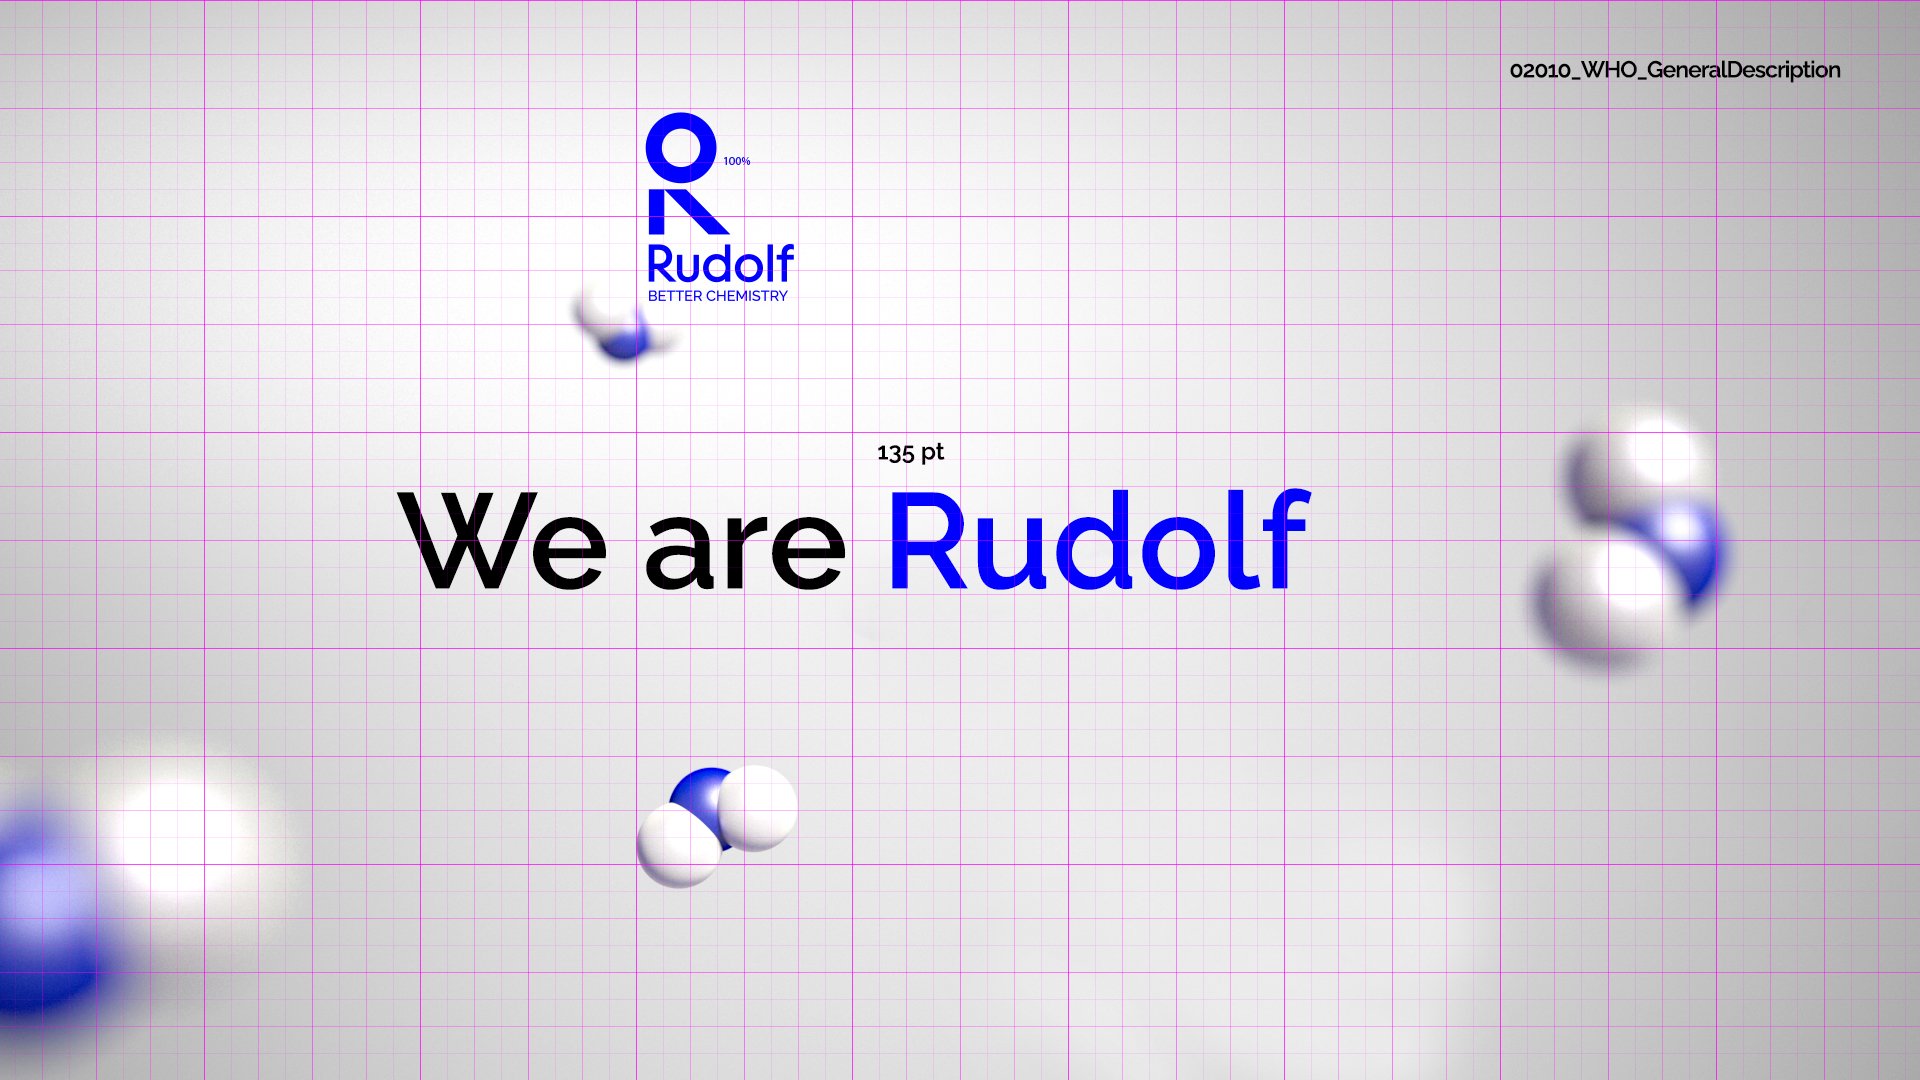 rudolf-Better-chemistry-event-film-production-corporate-video-rob-adalierd-emocion-emotion-graphics-germany-2023-design-studio-6.jpg